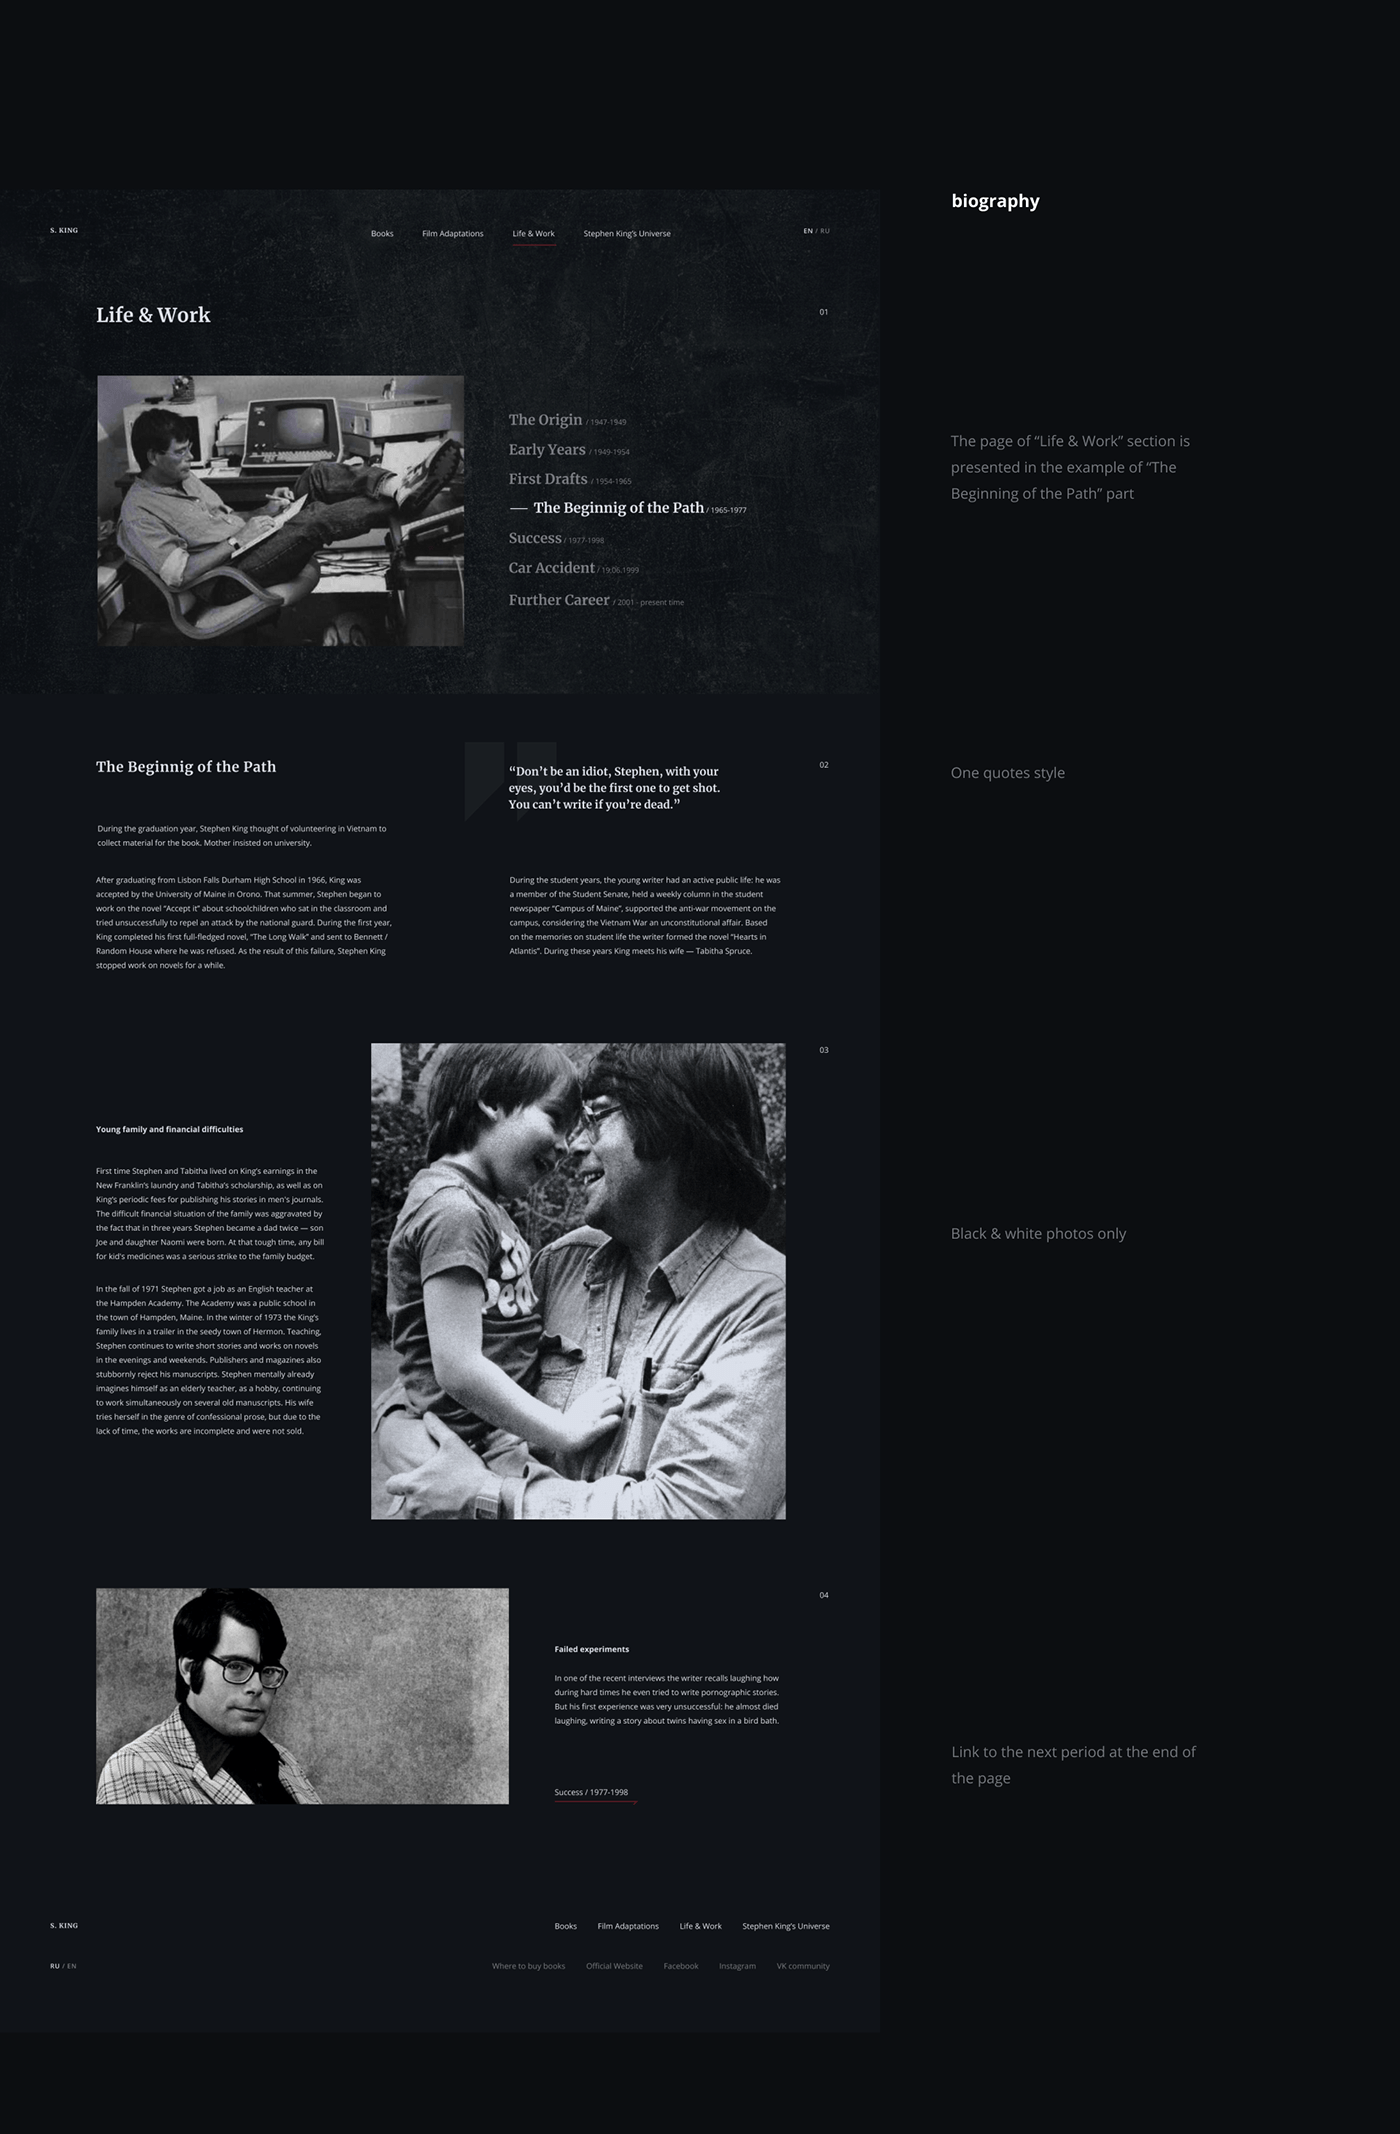 Author biography book horror Platform Stephen King Web Design  concept movie Website